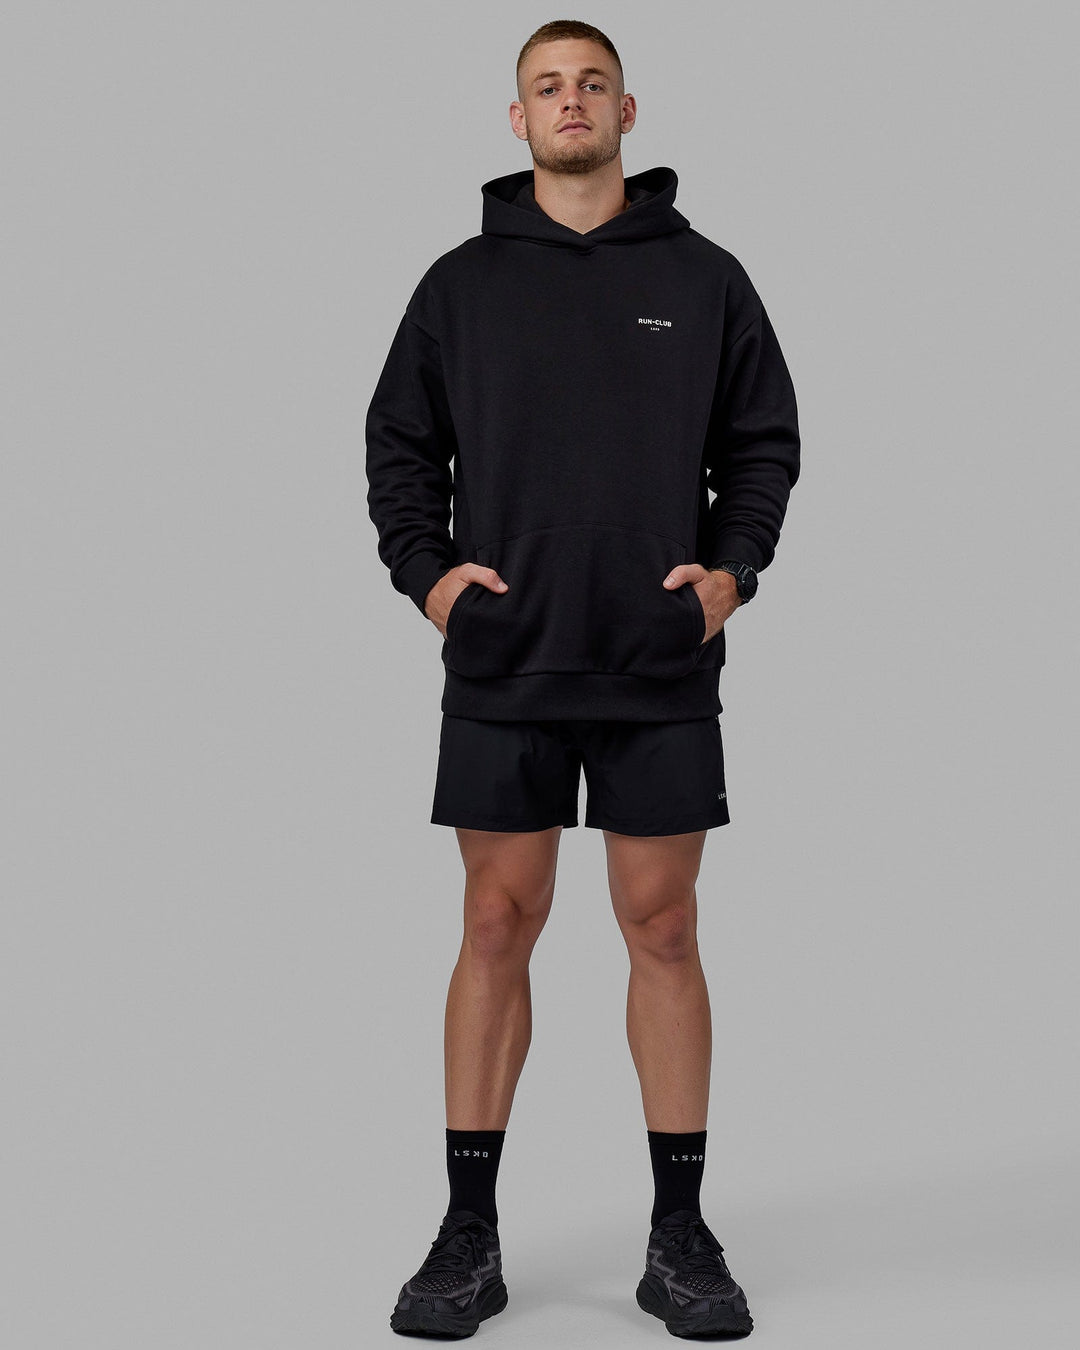 Man wearing Unisex RUN-CLUB Hoodie Oversize - Black